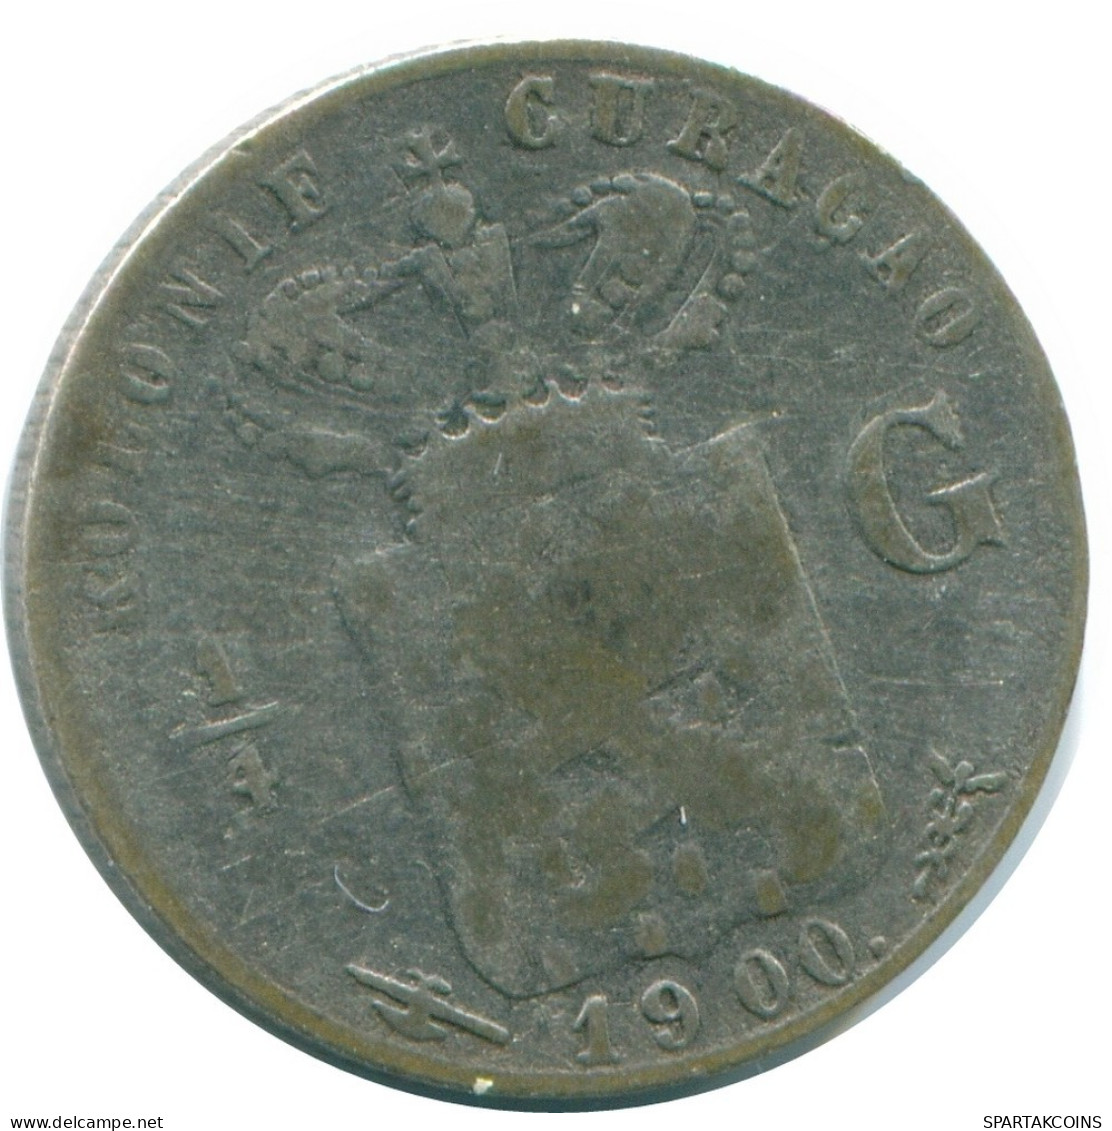 1/4 GULDEN 1900 CURACAO Netherlands SILVER Colonial Coin #NL10500.4.U.A - Curaçao